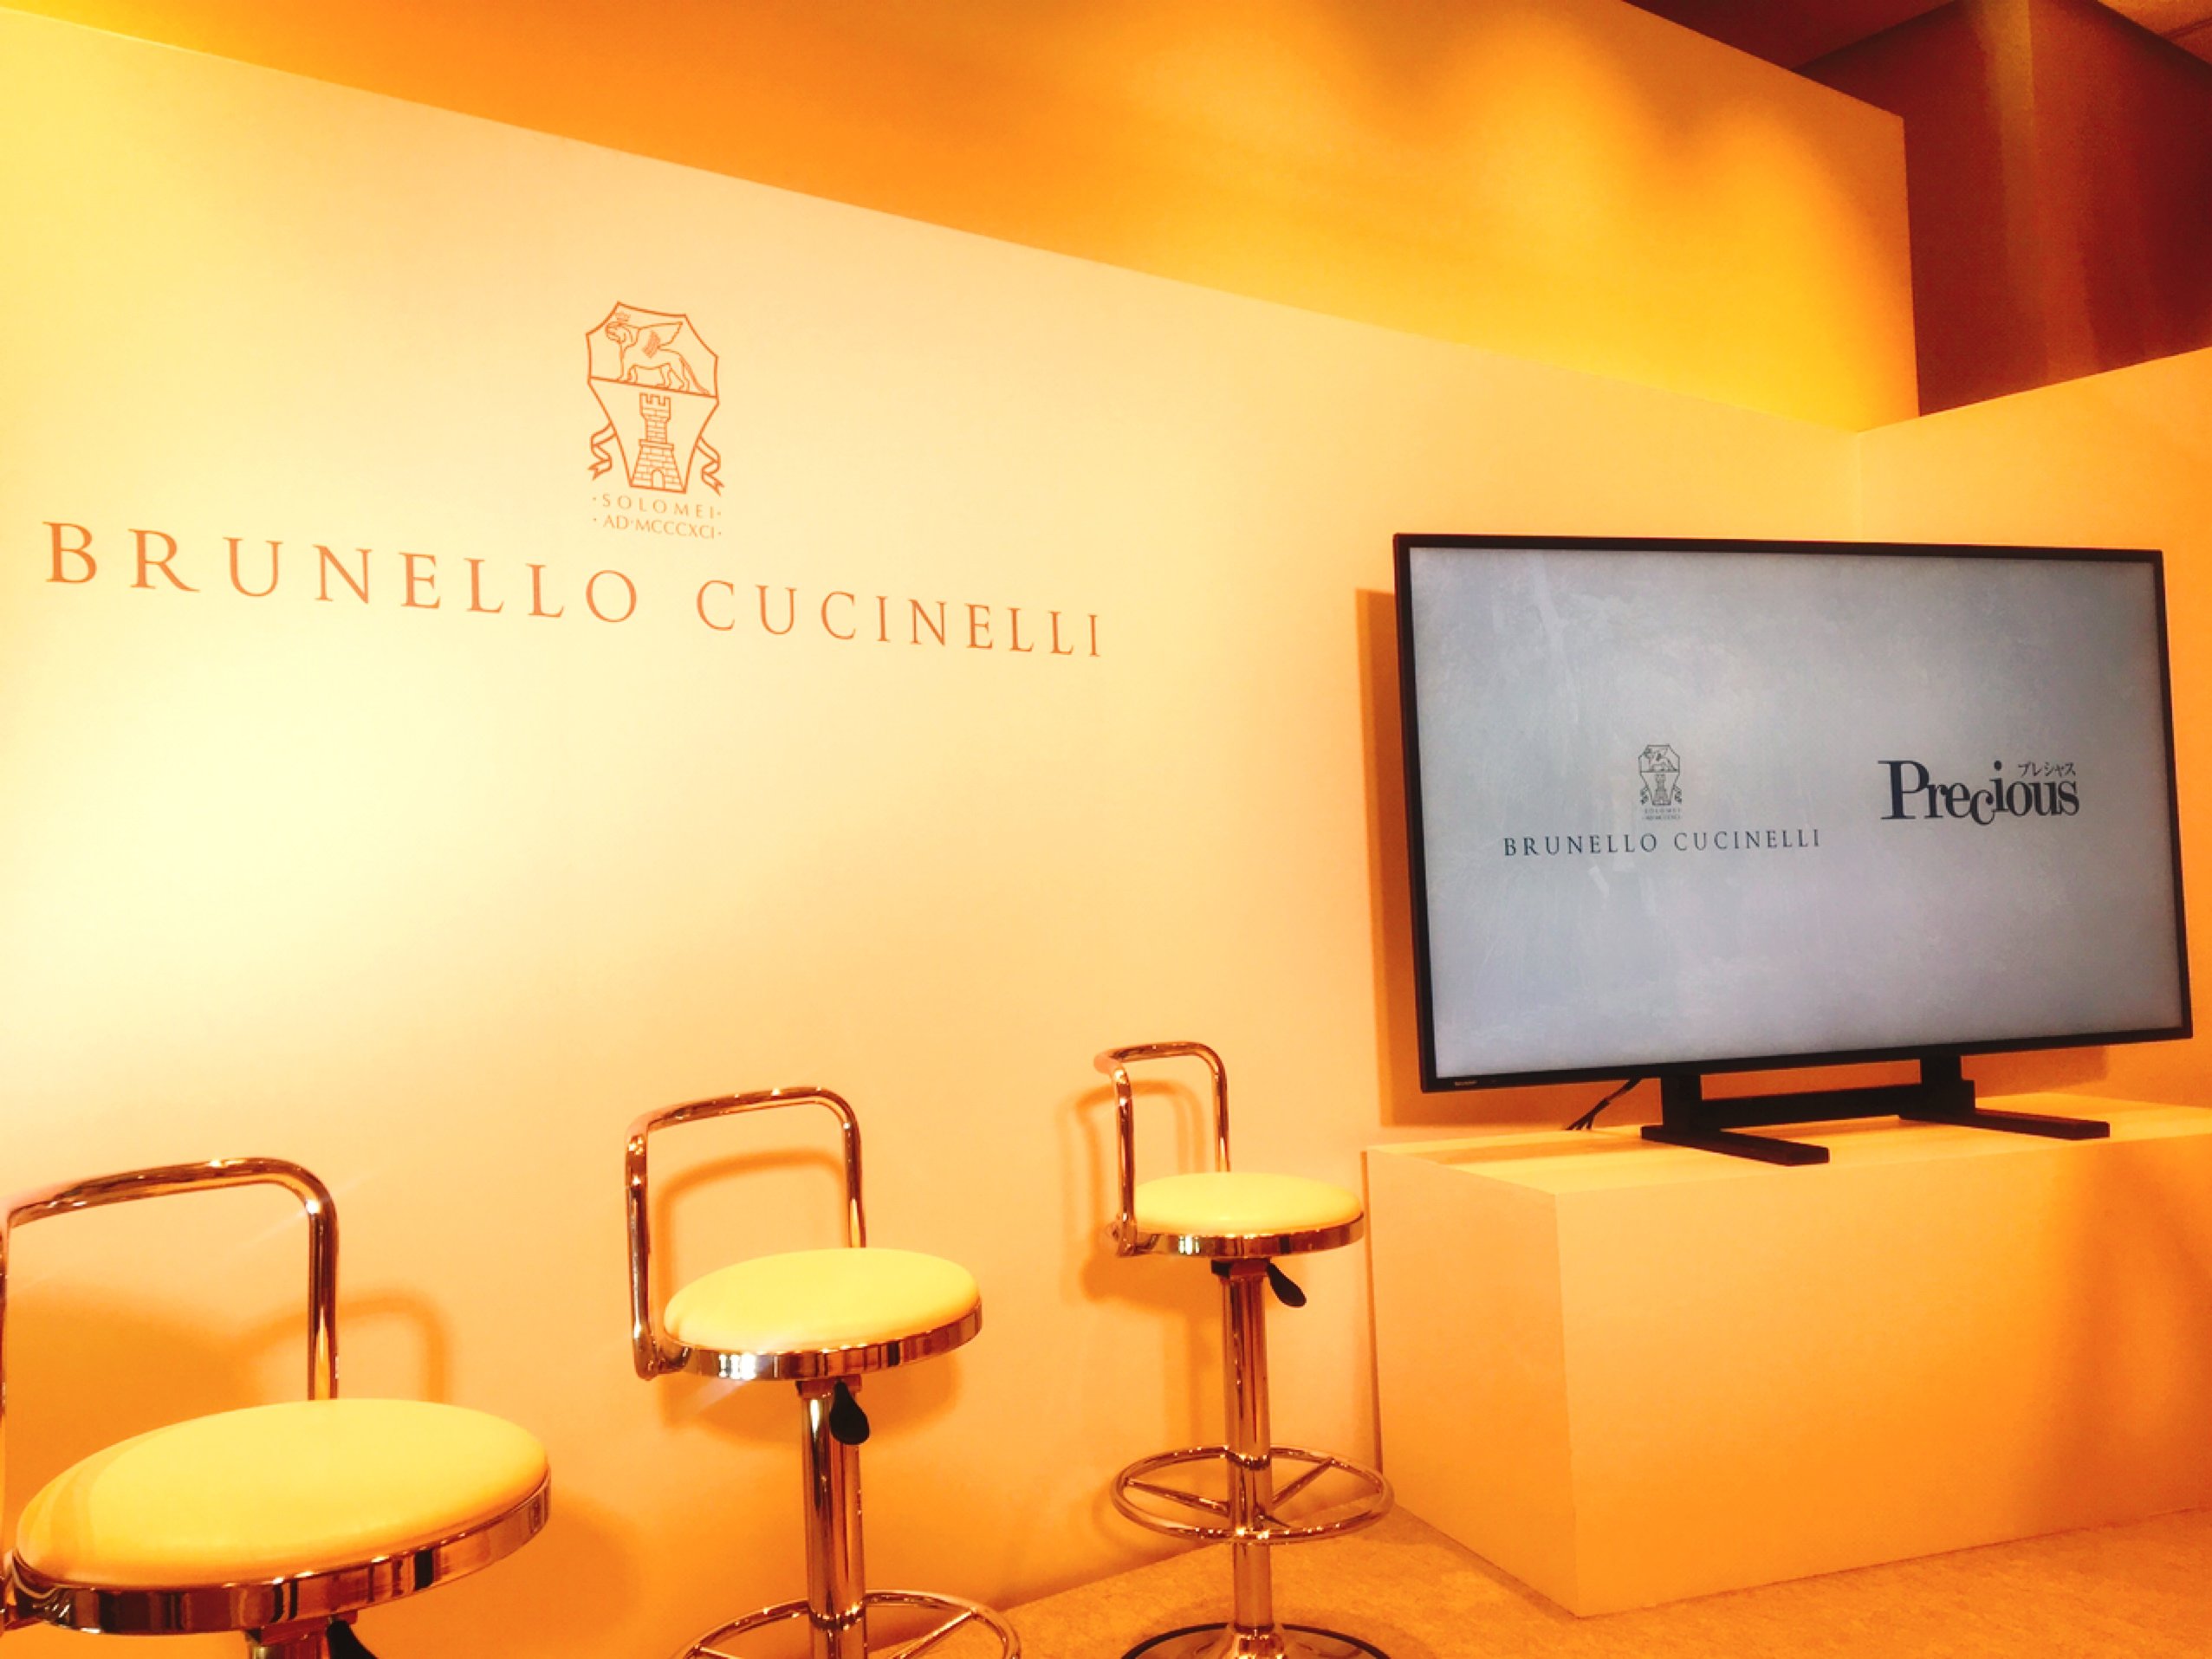 Brunello Cucineli 雑誌 Precious コラボイベント